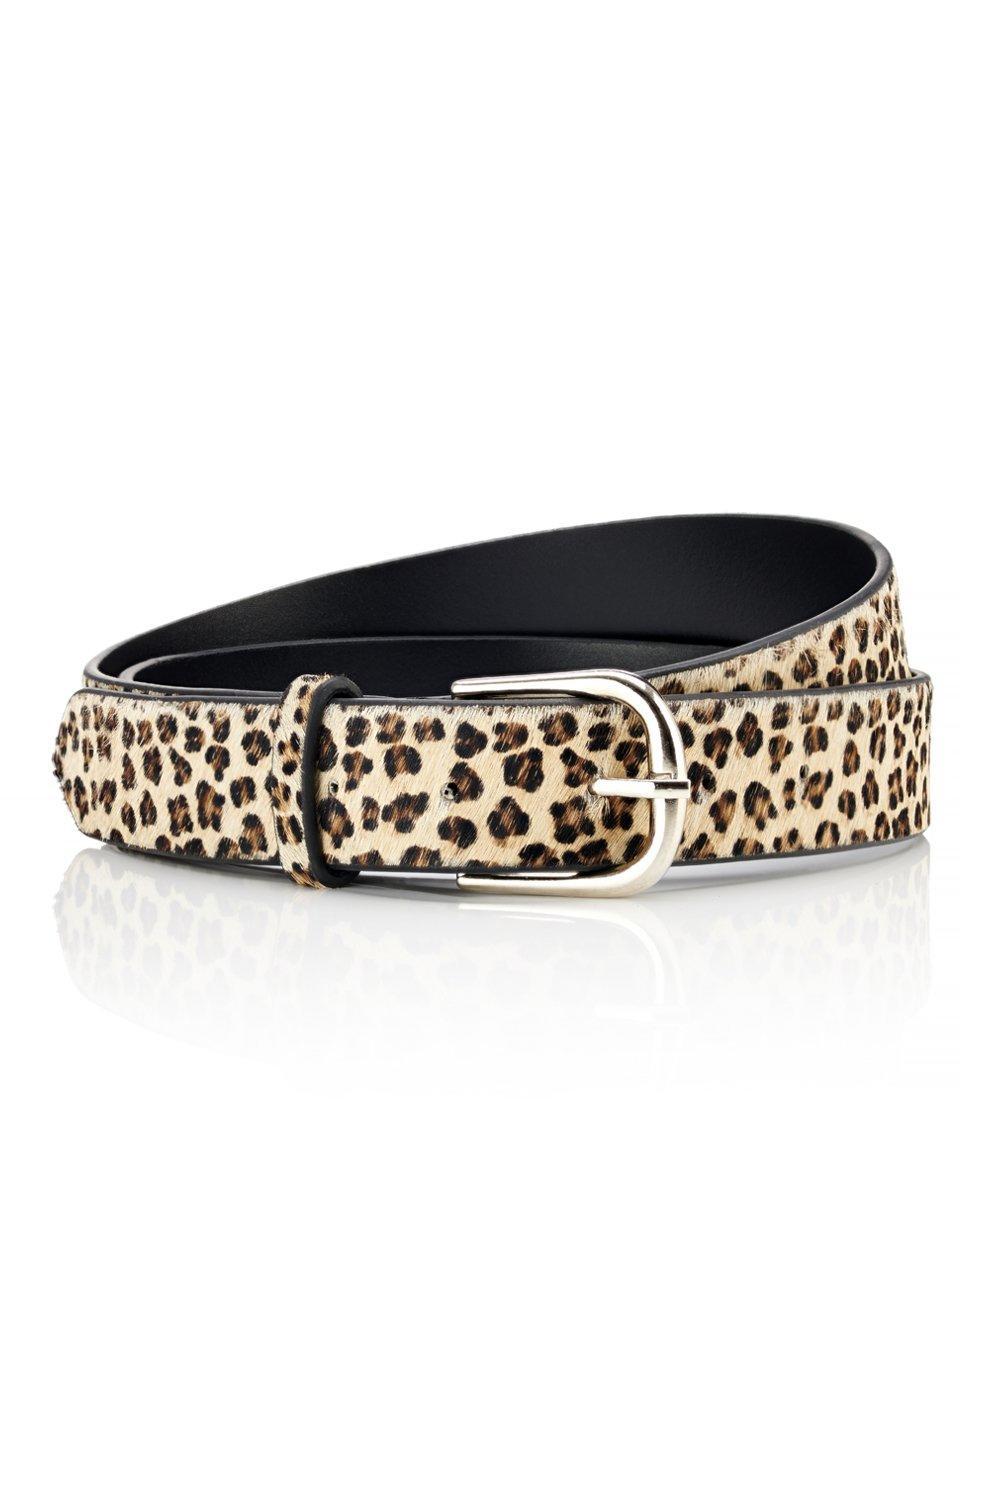 Cheetah print leather belt